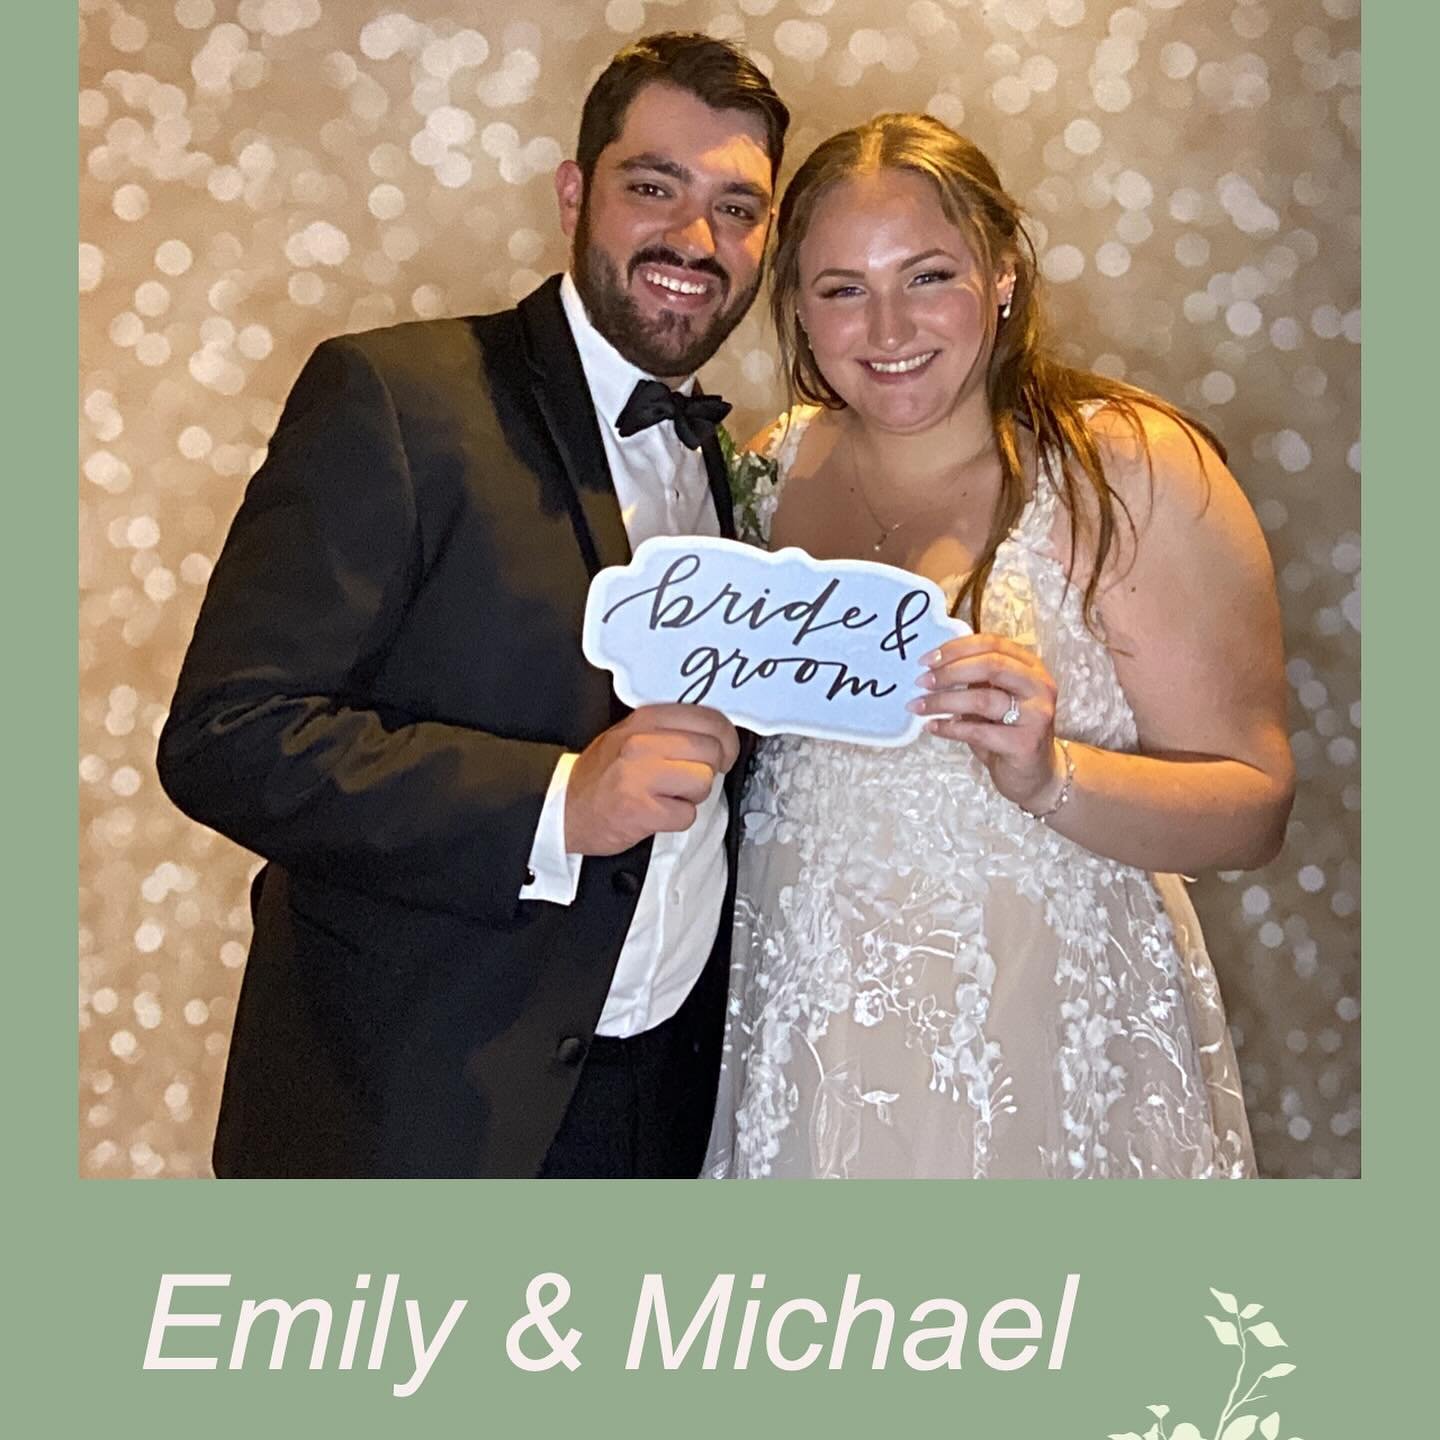 Congratulations Emily &amp; Michael!!! #bostonphotobooth #goodtimesunlimiteddj #capeclubofsharon